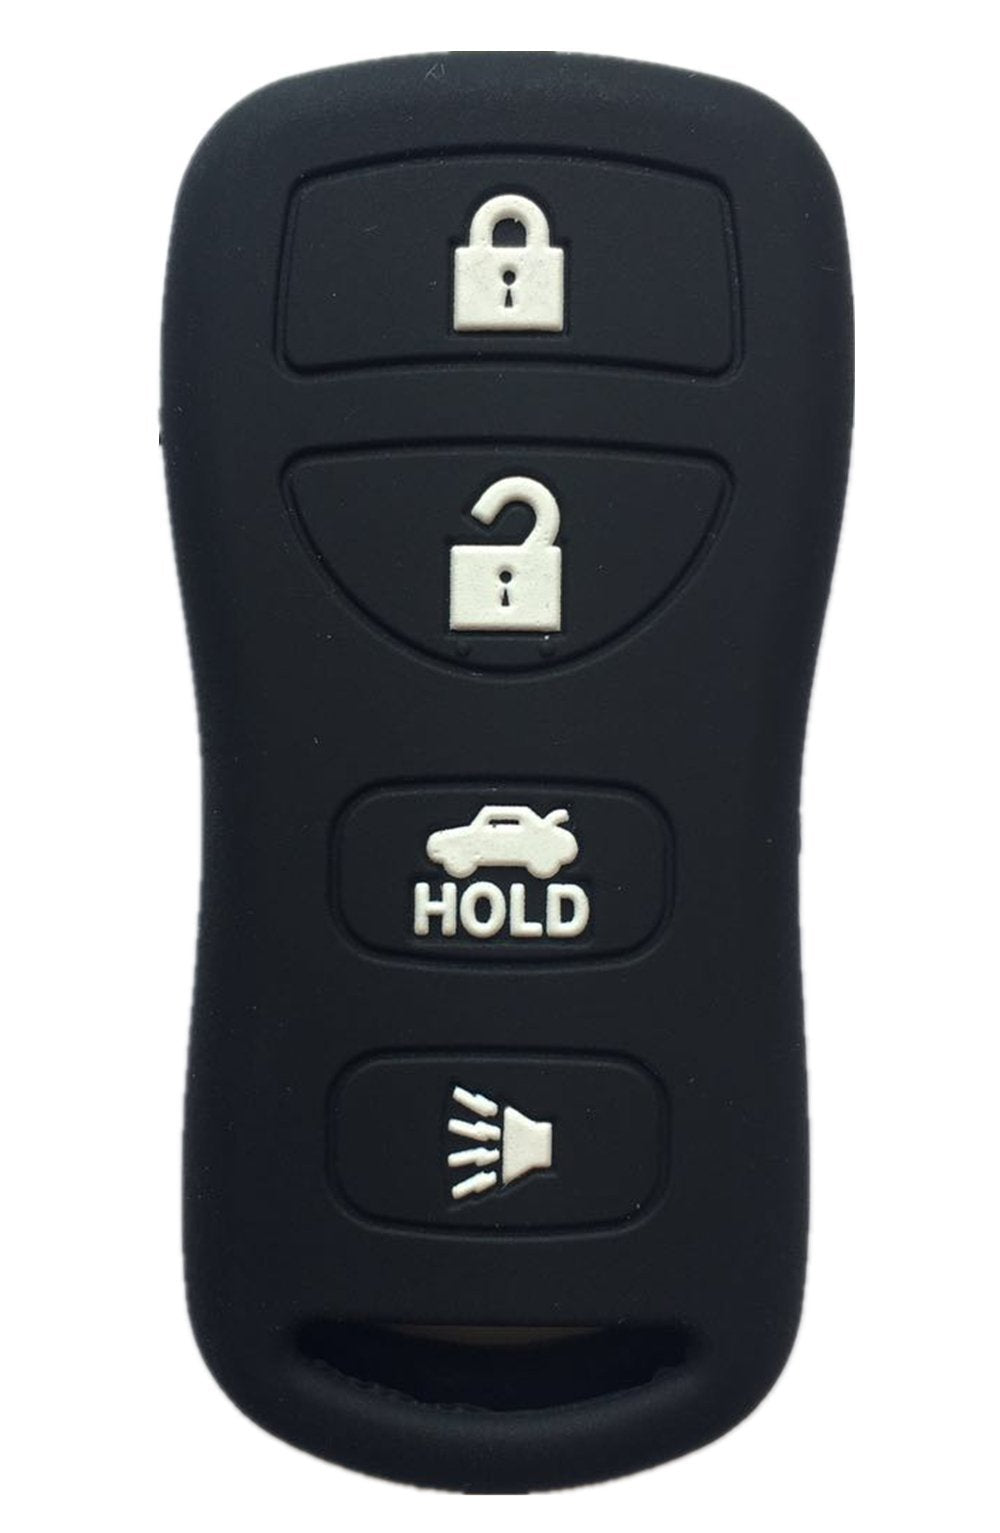  [AUSTRALIA] - Rpkey Silicone Keyless Entry Remote Control Key Fob Cover Case protector For Infiniti FX35 FX45 G35 I35 Q45 QX56 Nissan 350Z Altima Armada Maxima Quest Sentra KBRASTU15 28268-C991A 28268-ZB700